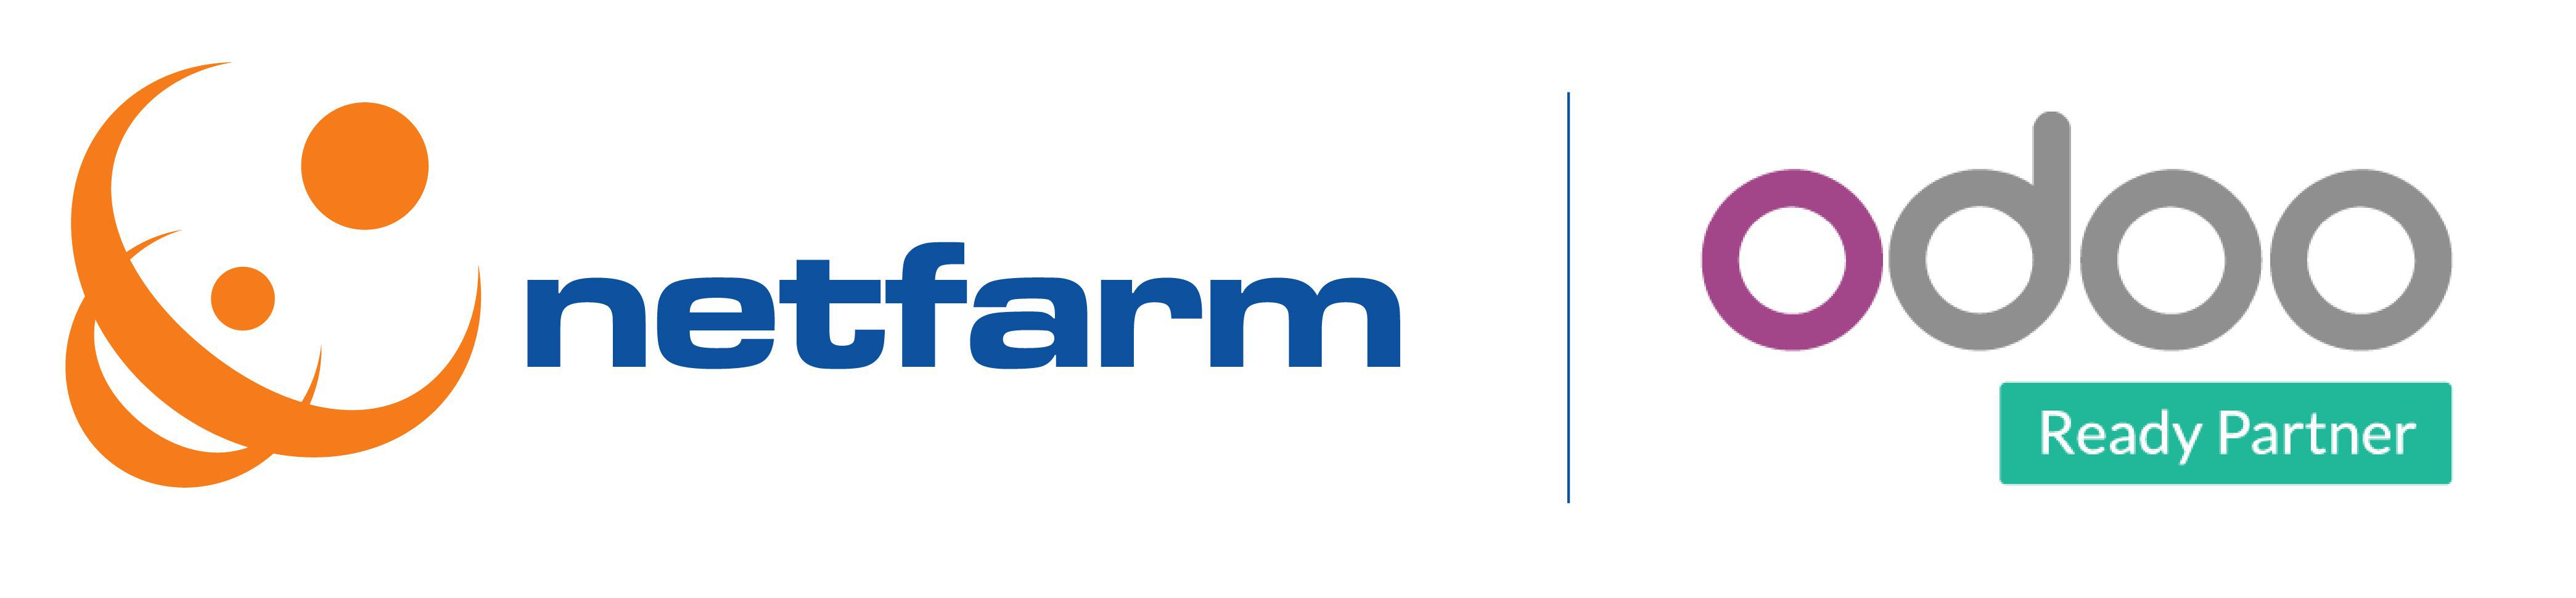 logo Netfarm partner Odoo